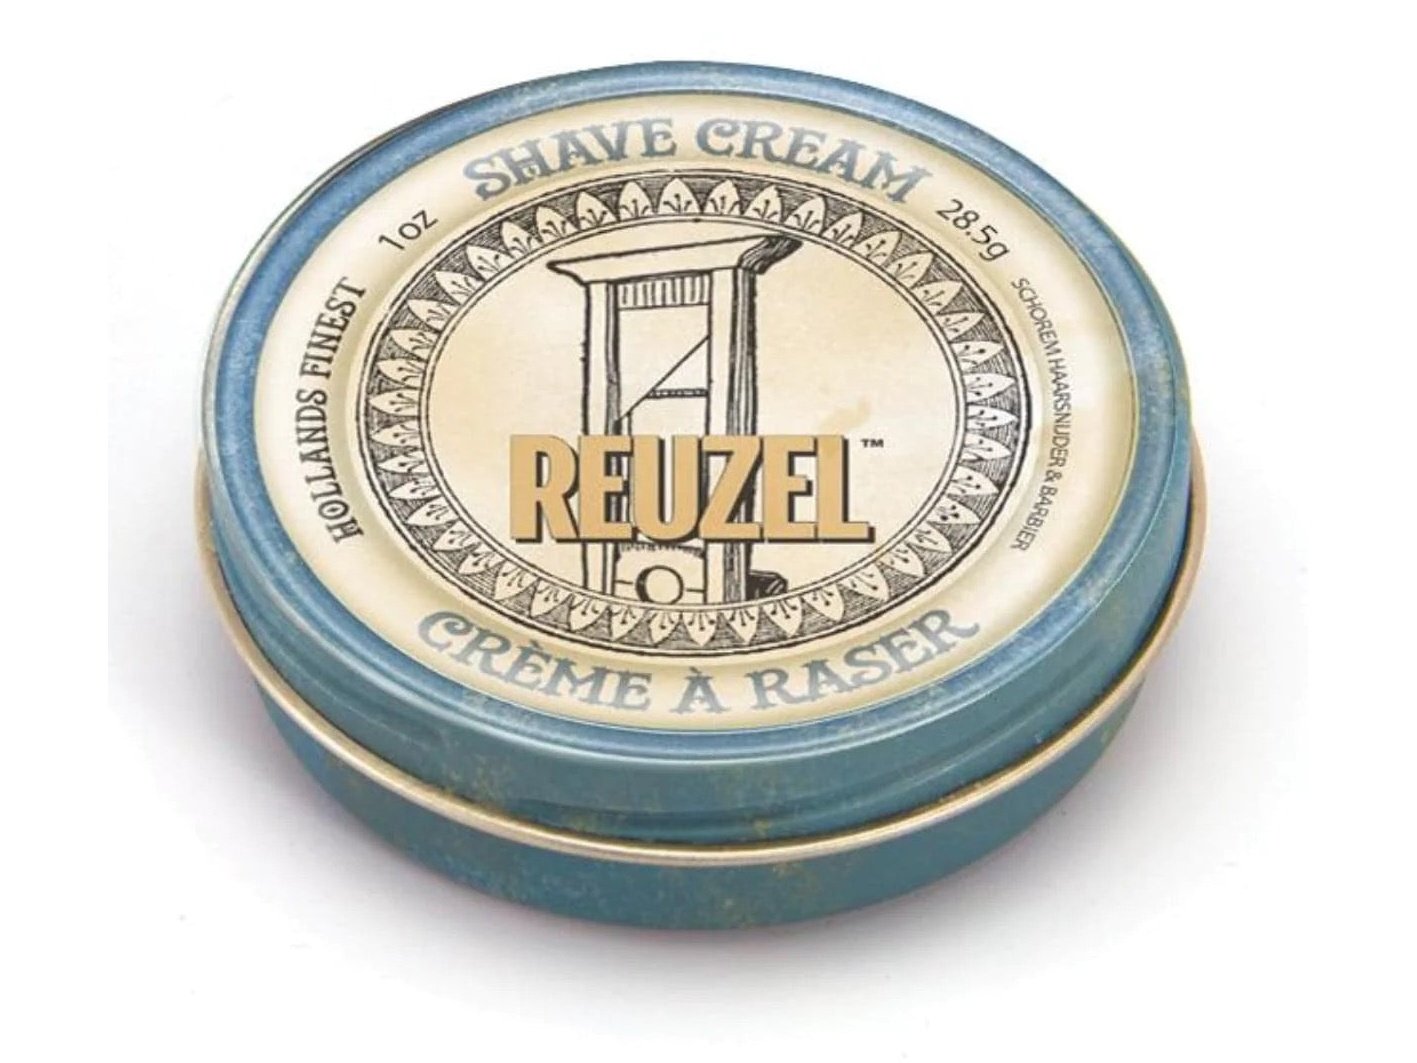 Load image into Gallery viewer, Reuzel Shave Cream, 3.38 oz.
